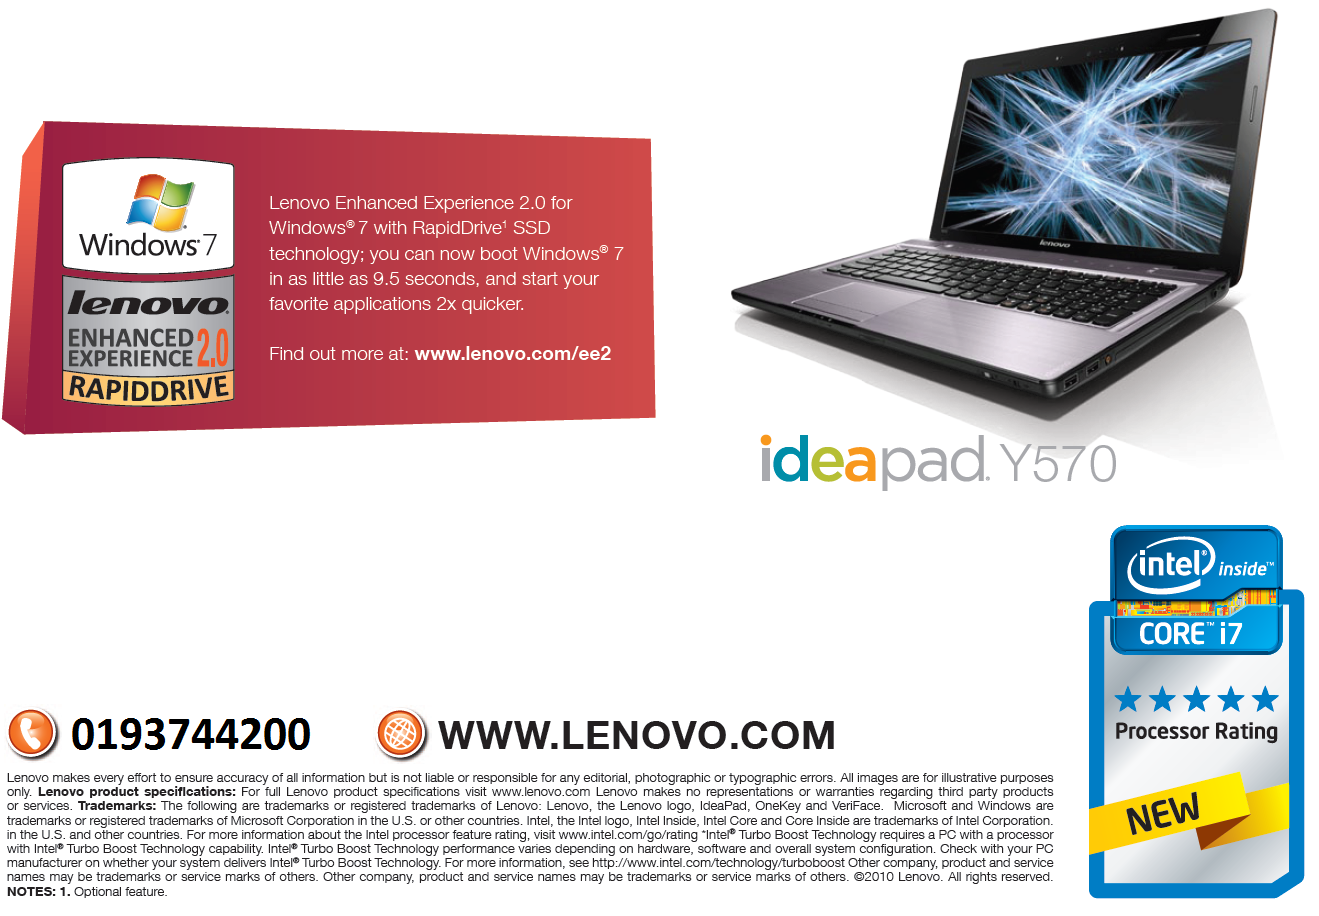 GOLDWORKS: New Lenovo Ideapad Y570 15.6" laptop RM3300